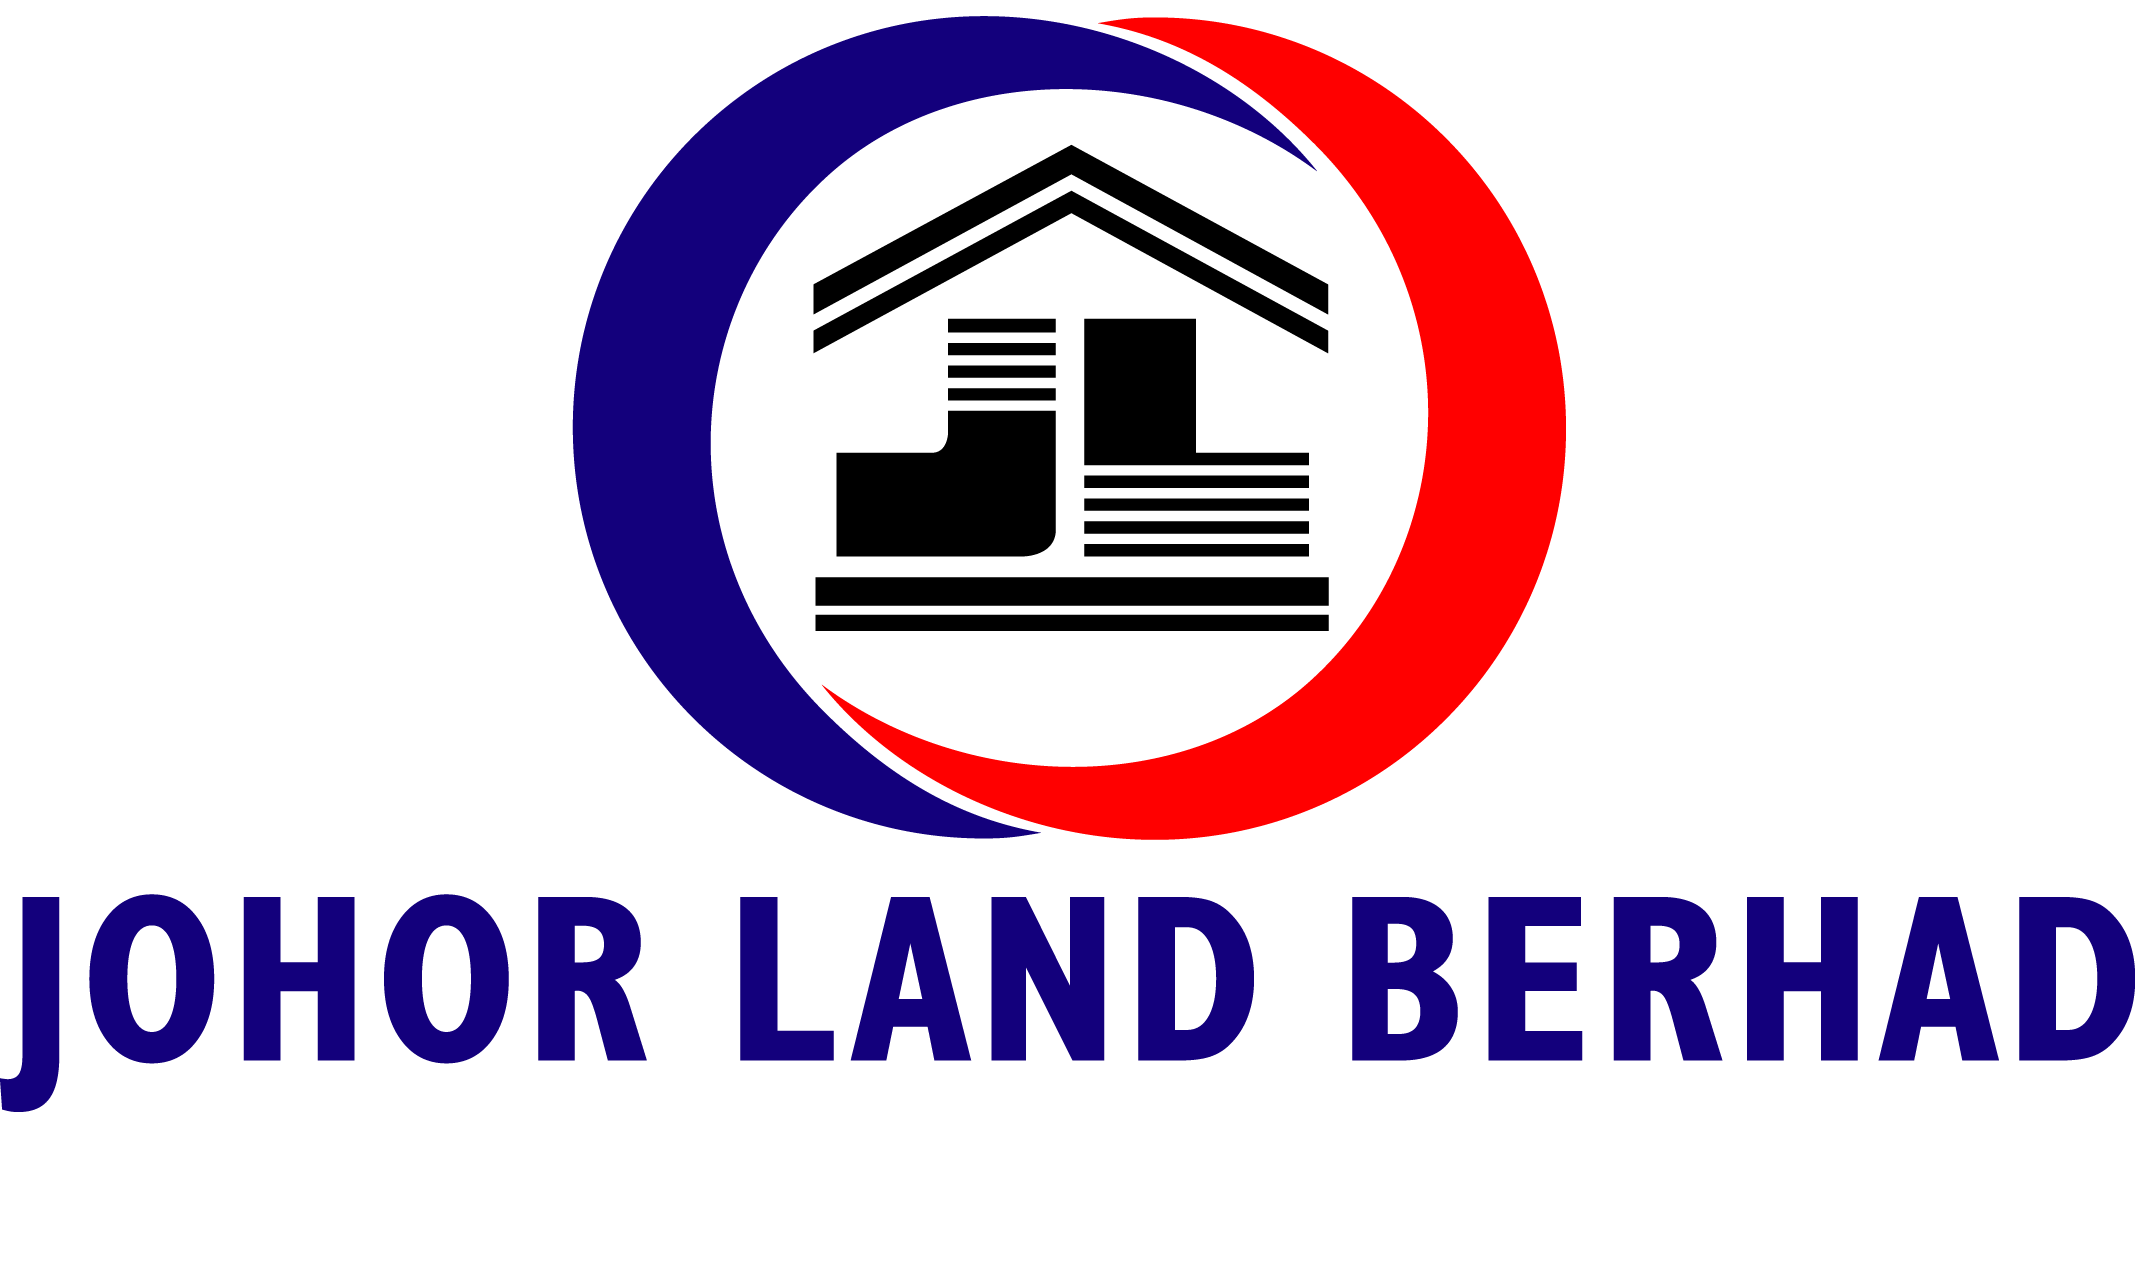 <p> Johor Land Brehad</p>